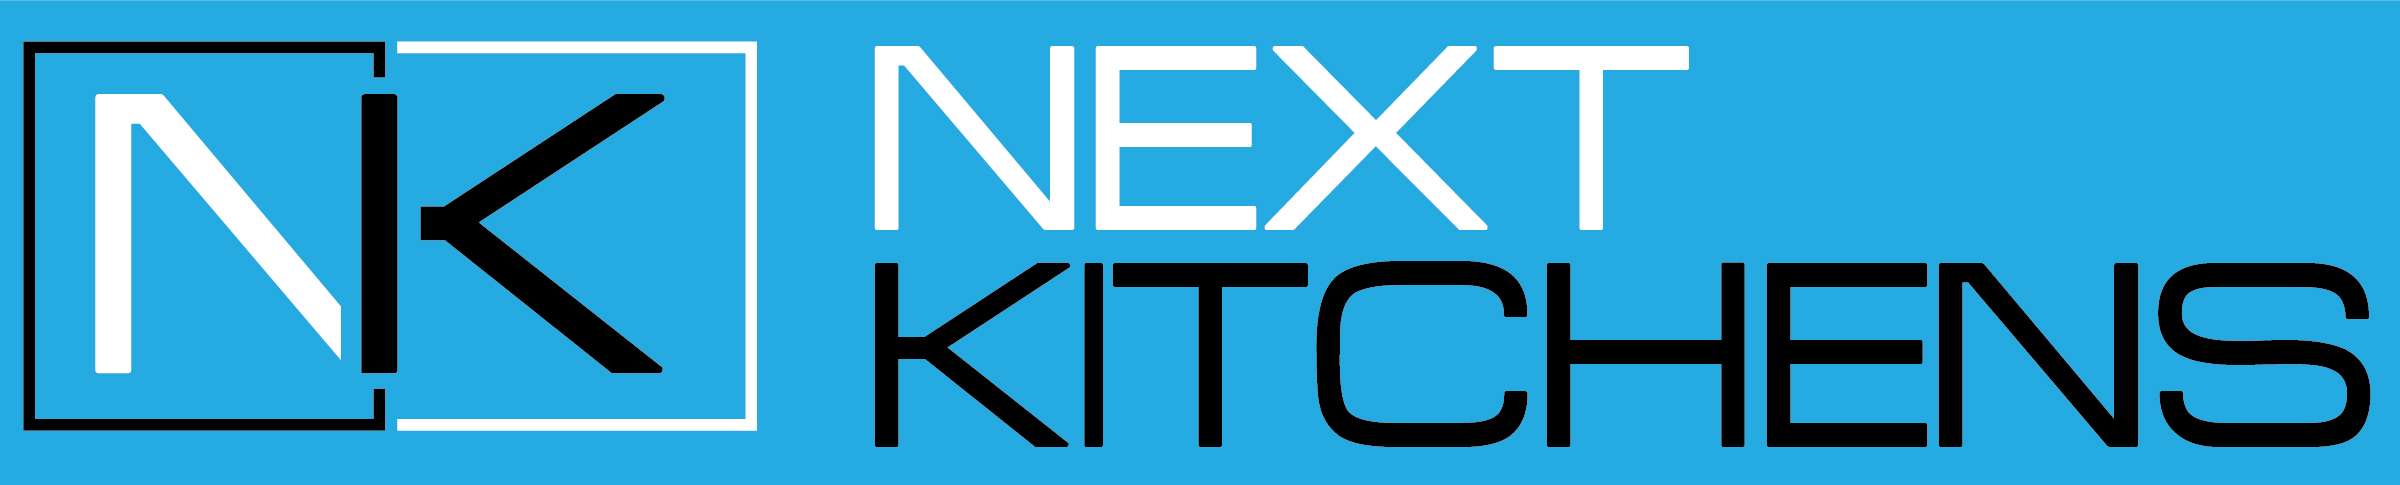 Next Kitchens Logo